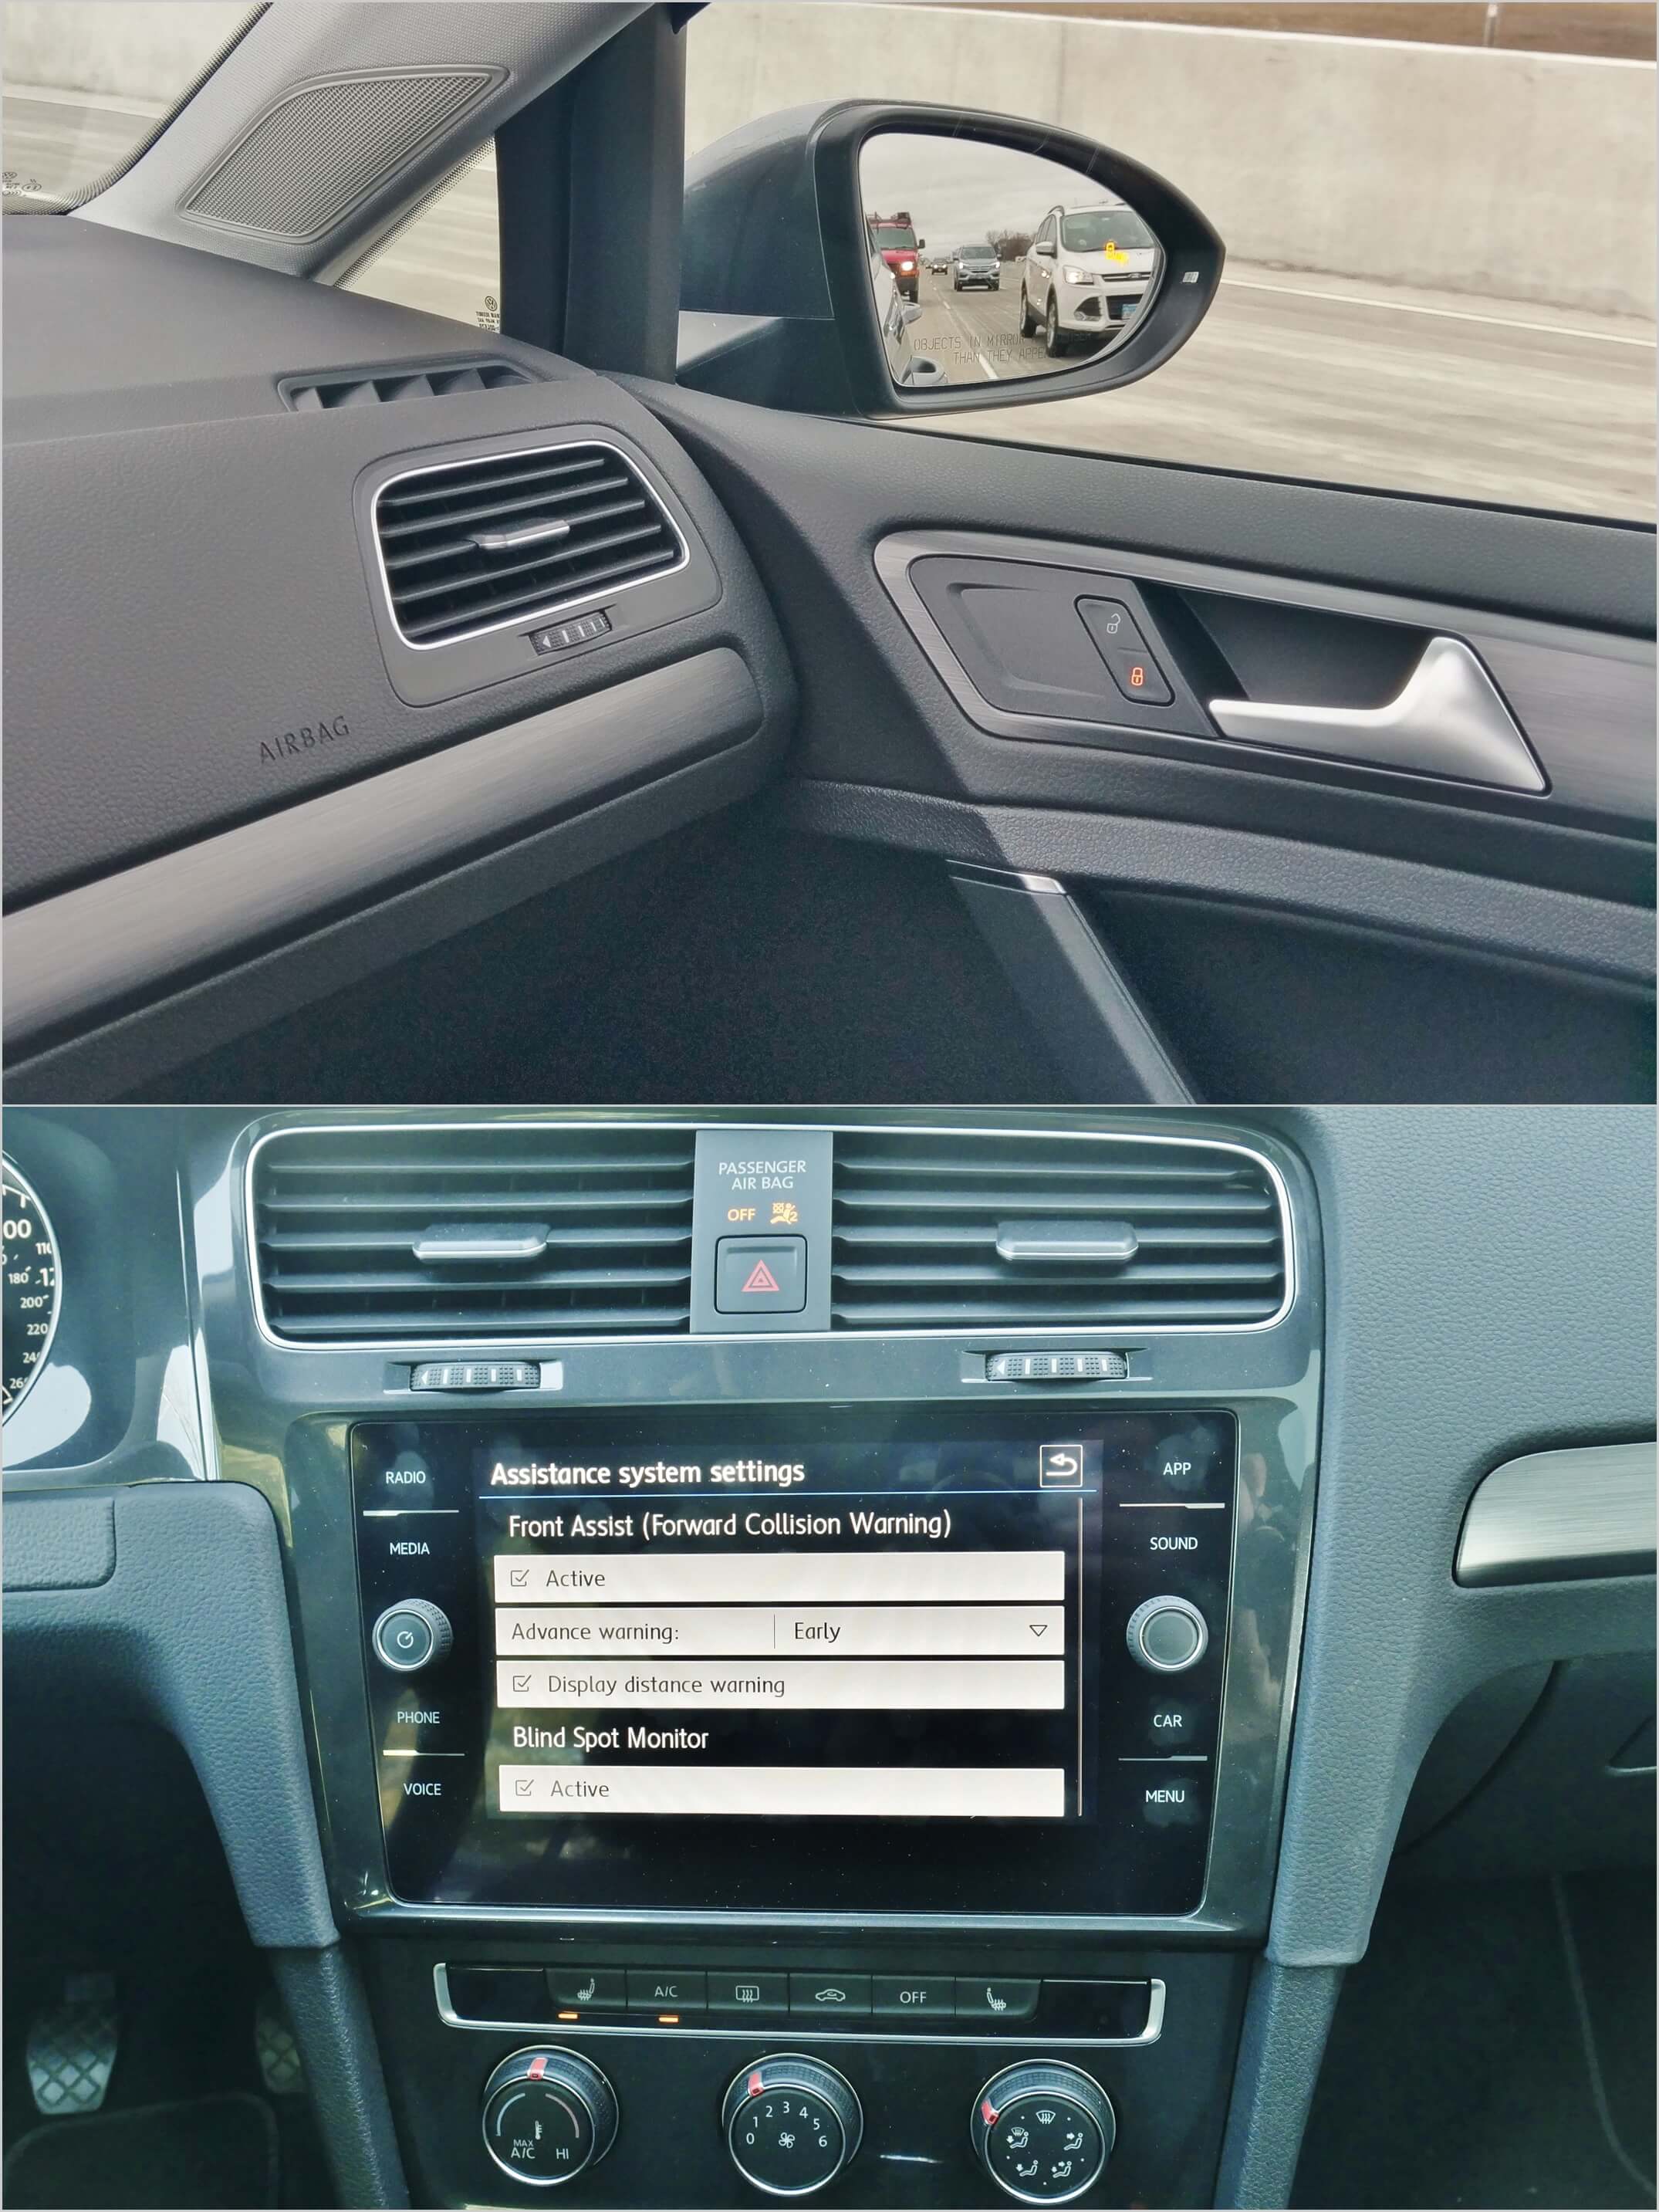 2019 Volkswagen Golf SE: Driver assist technology including Blind Spot warning, rear cross traffic alert, forward collision / pedestrian avoidance braking